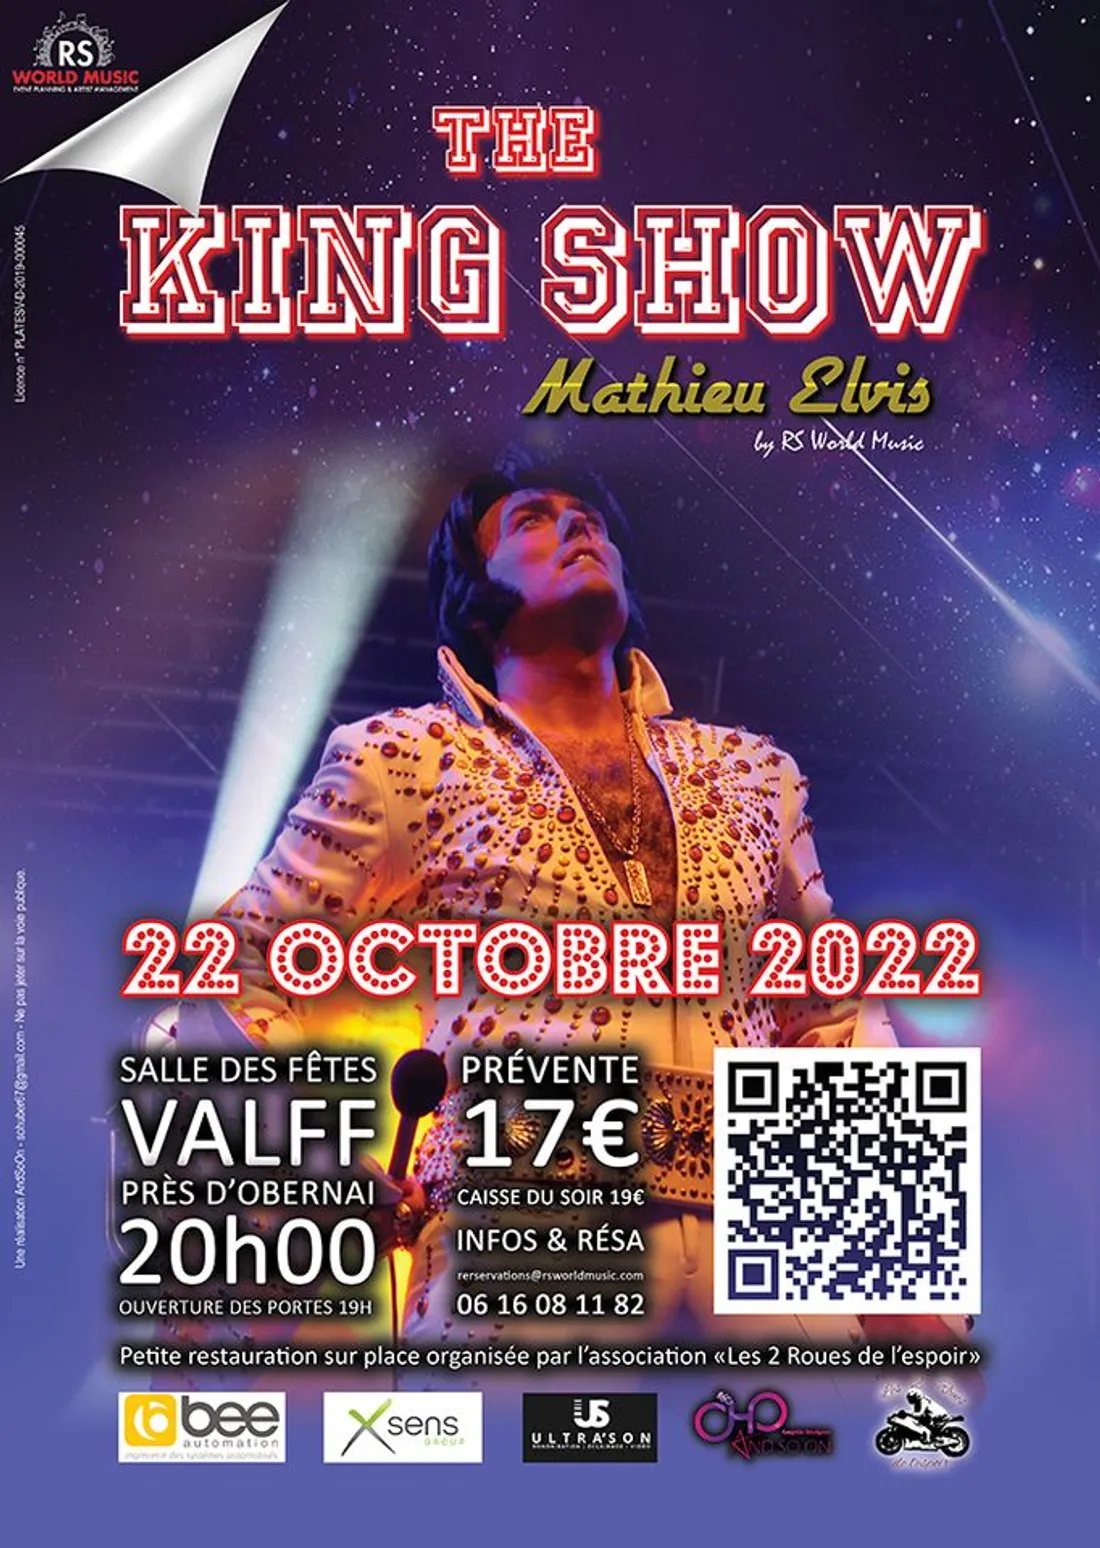 The King Show - Mathieu Elvis